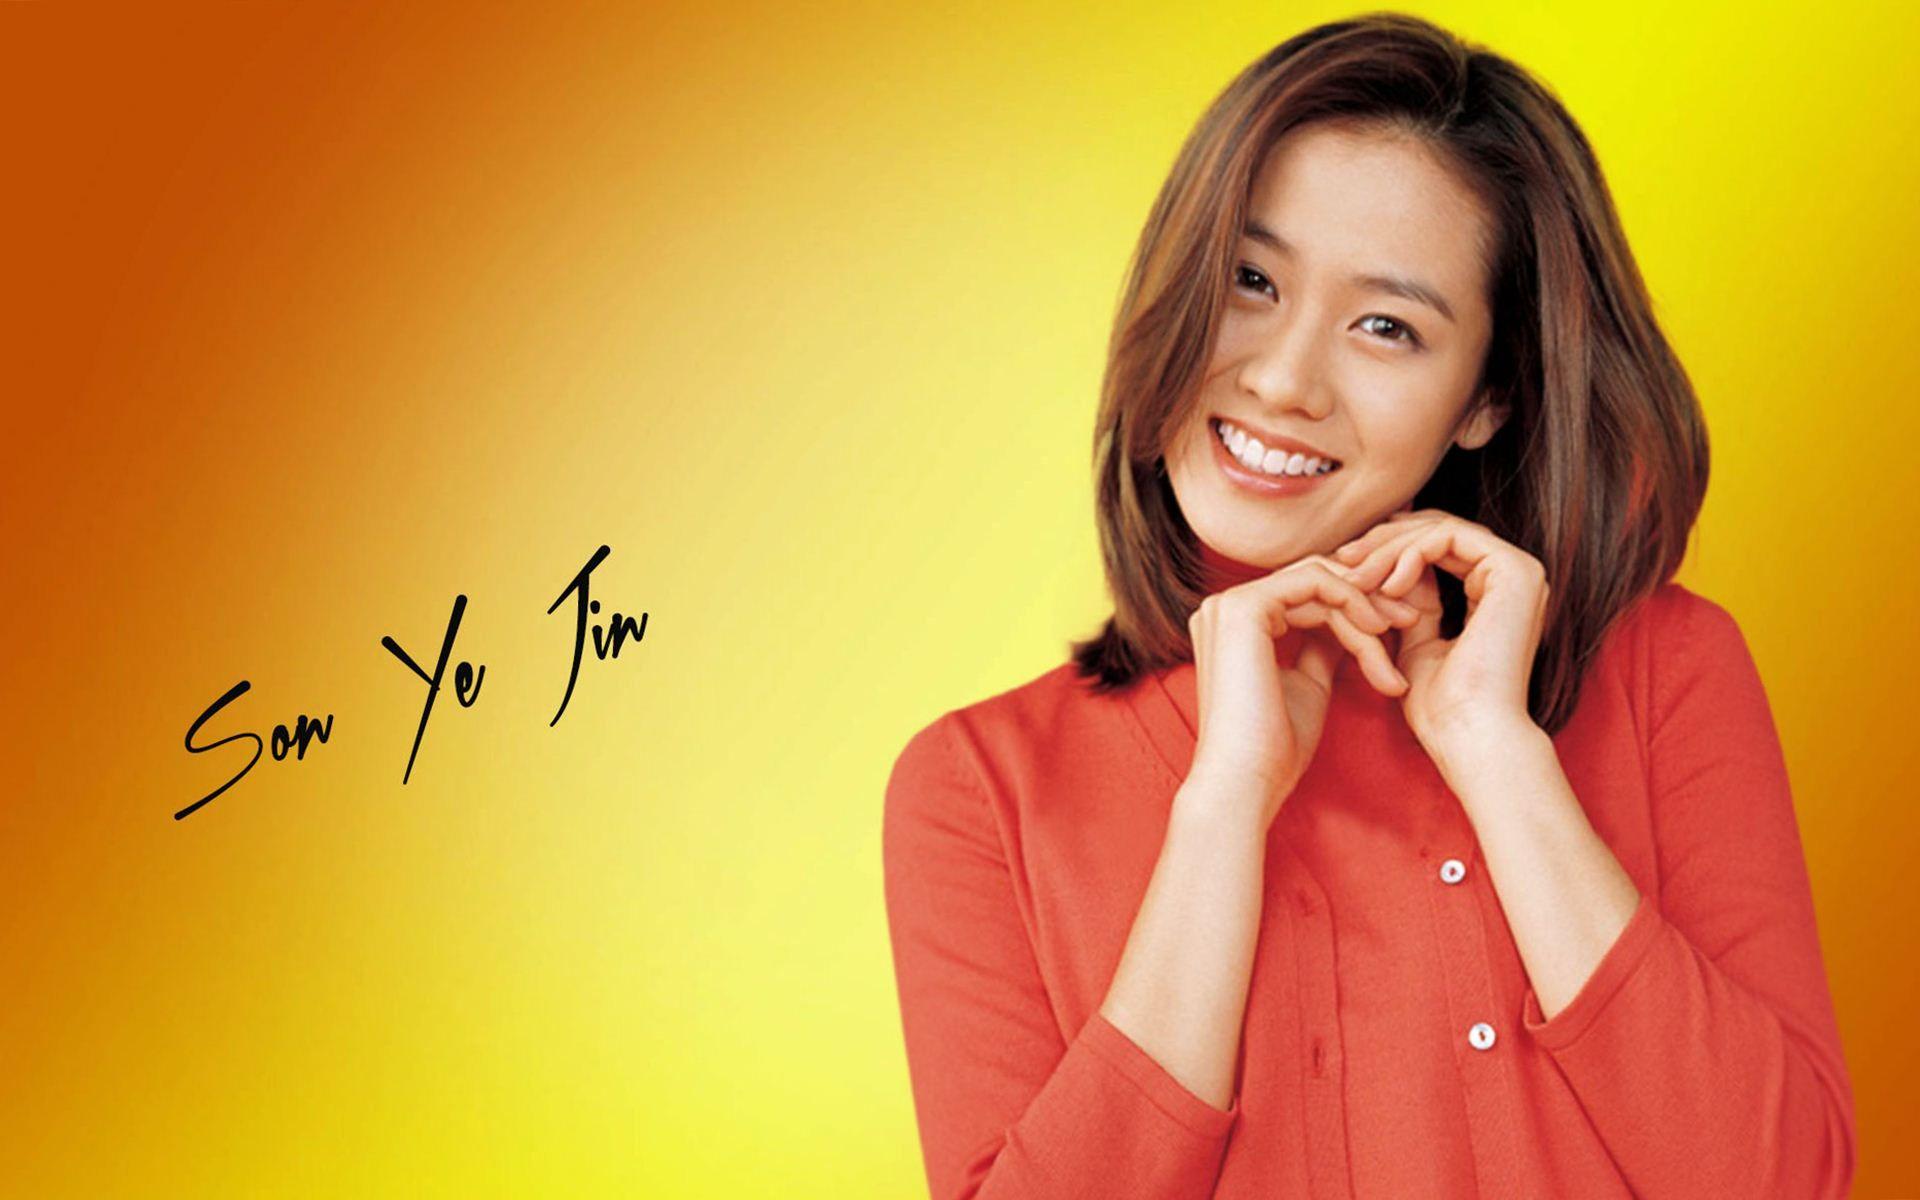 son ye jin cute korean girl actress wallpaper photo gallery ft w